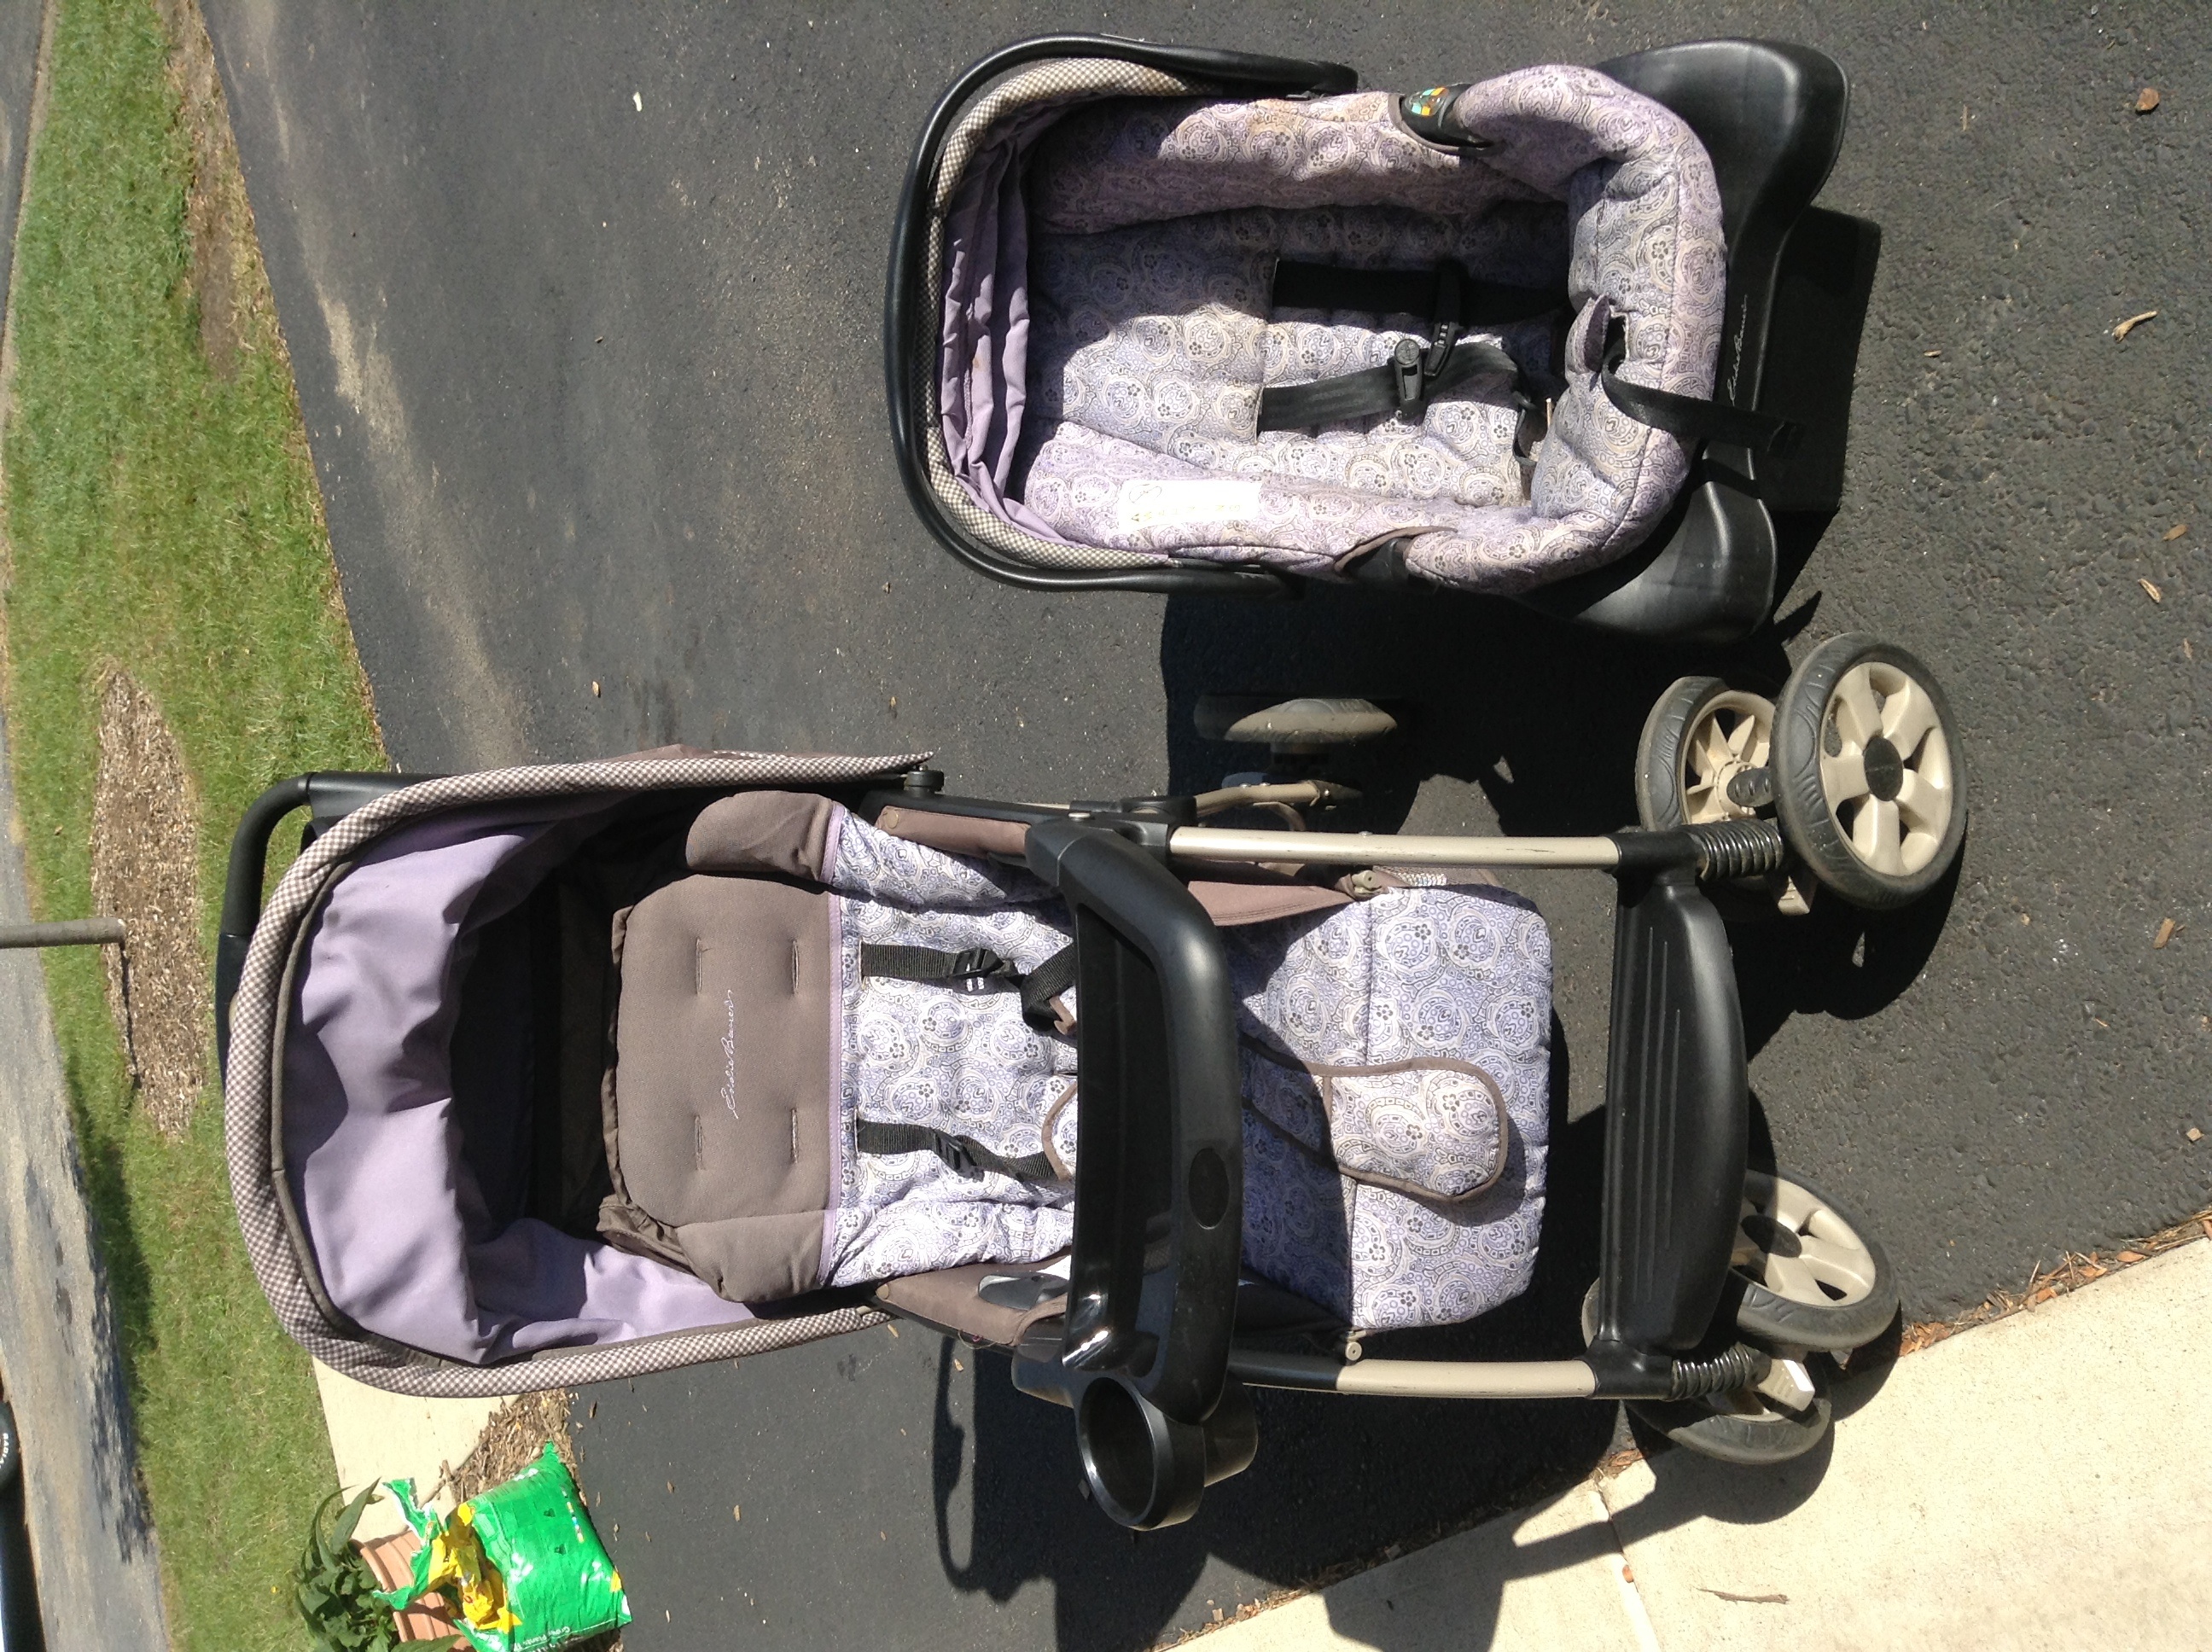 Eddie Bauer stroller/infant car seat